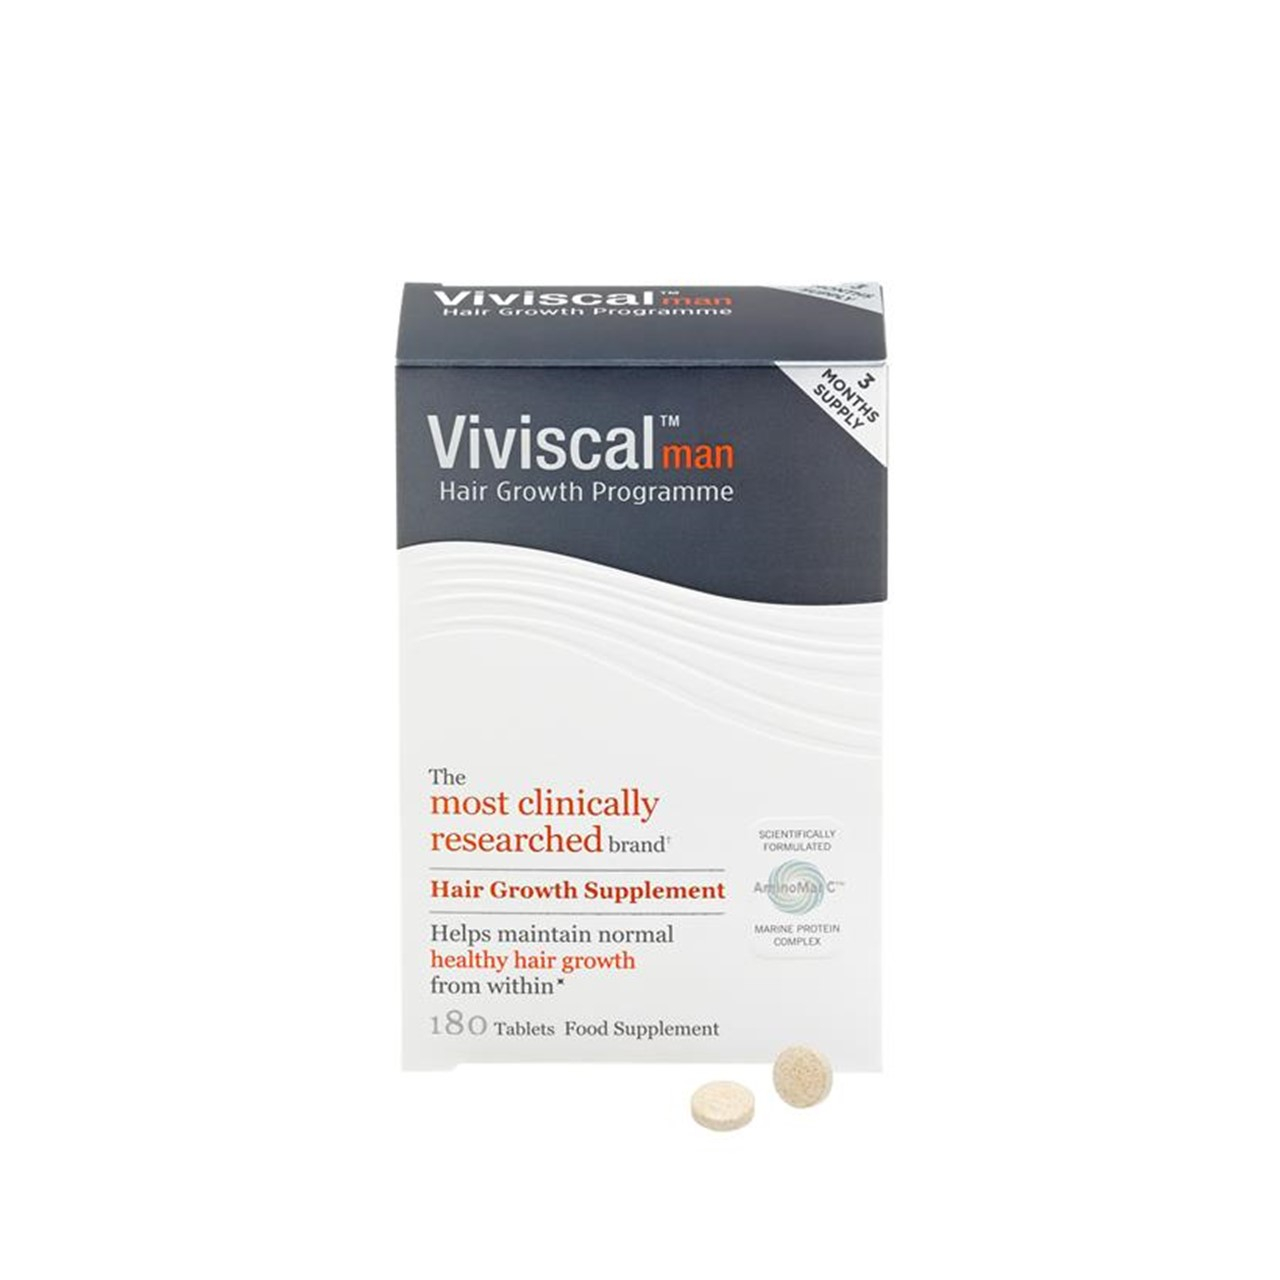 Viviscal Man Hair Growth Supplement Tablets x180